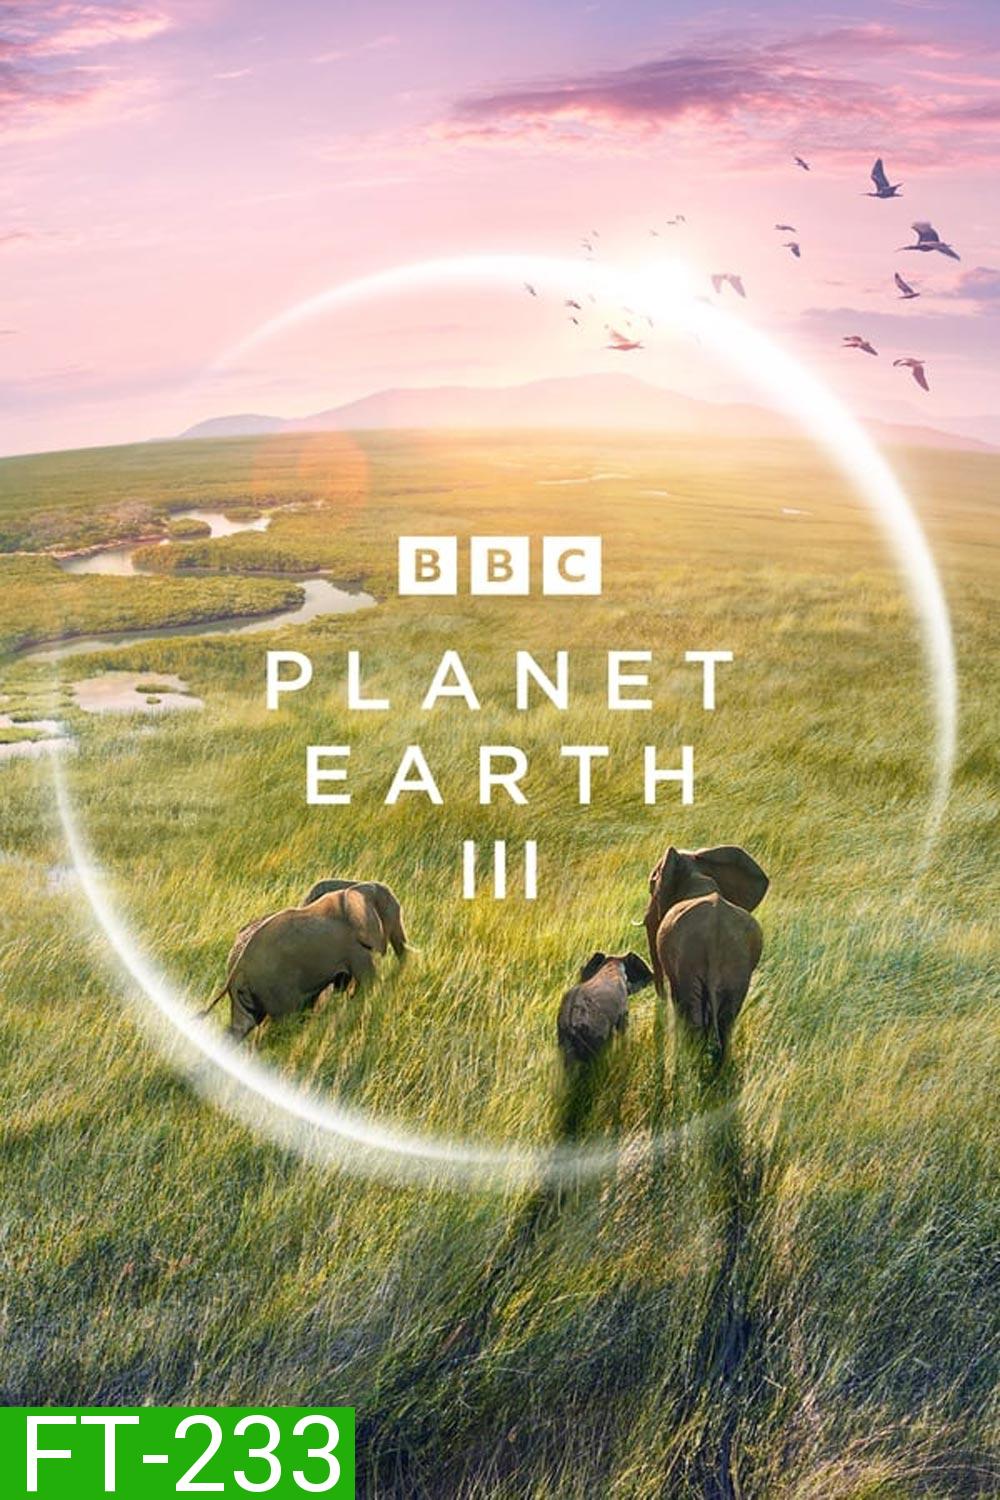 Planet Earth 3 BBC